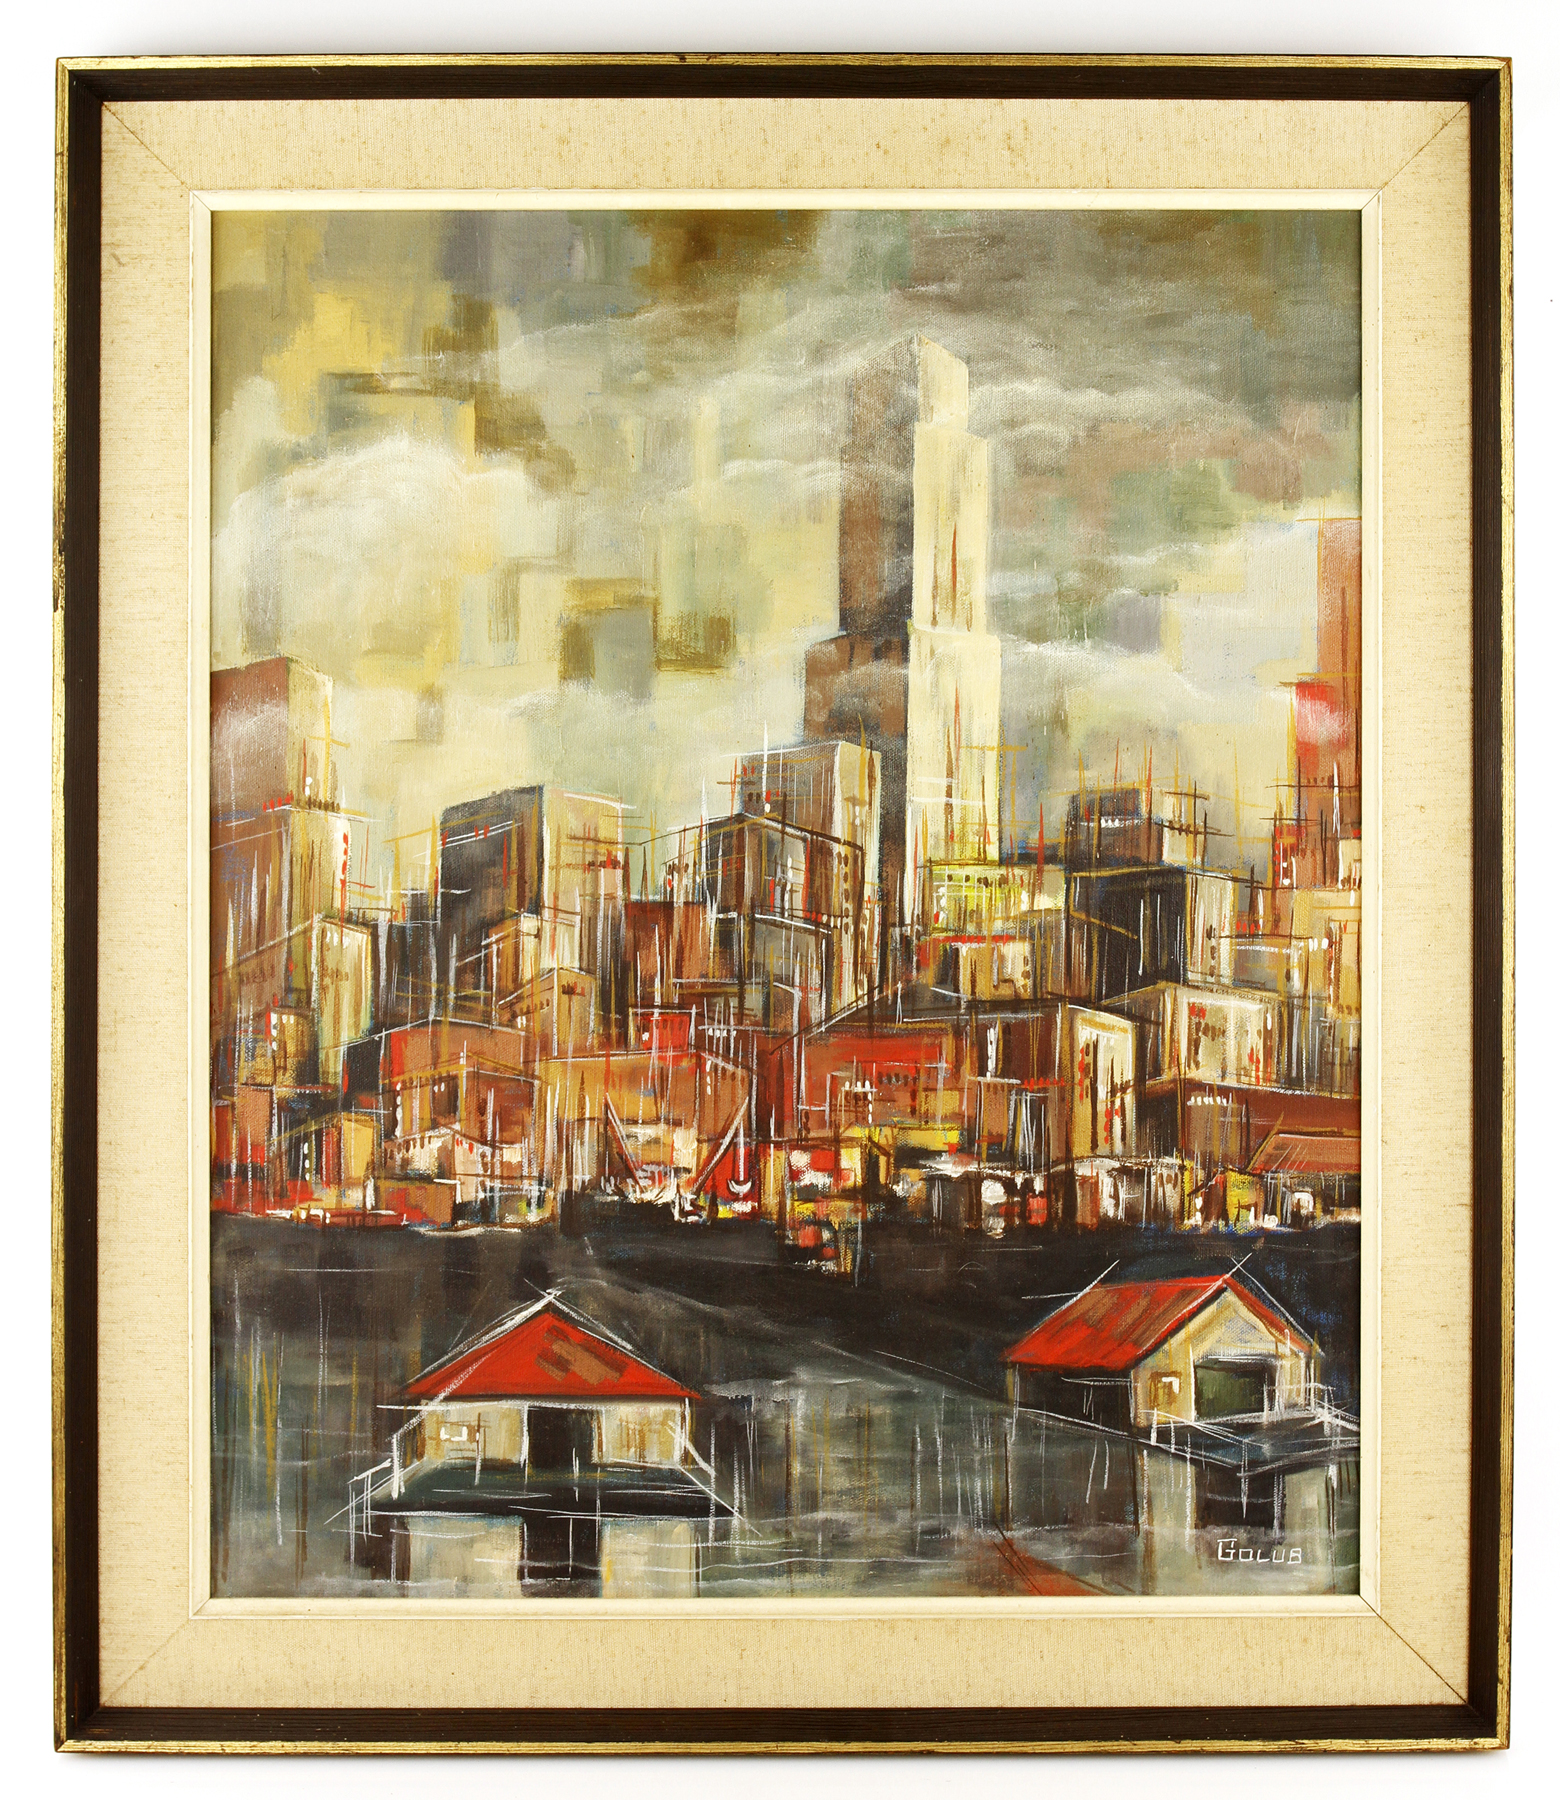 Leon Golub (American 1922-2004), cityscape, oil on canvas, signed lower right